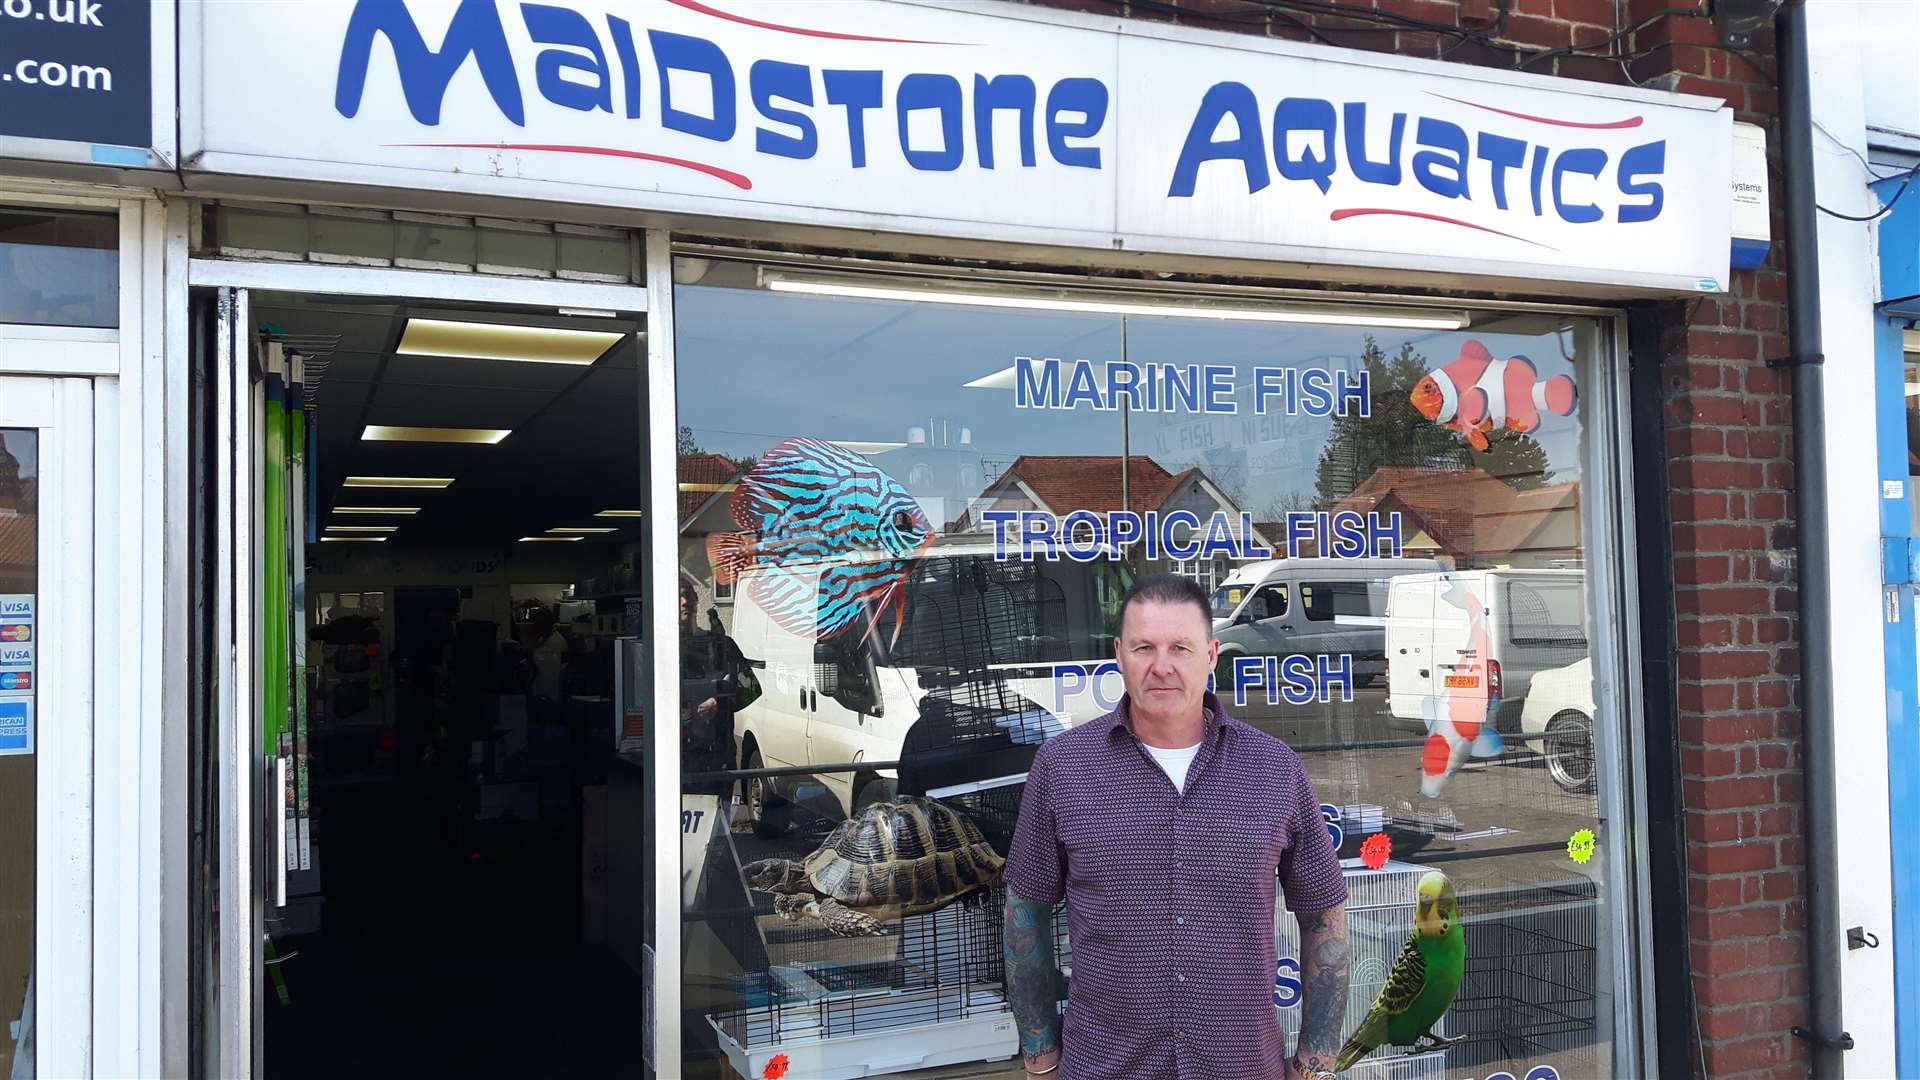 Mark Smith, the owner of Maidstone Aquatics